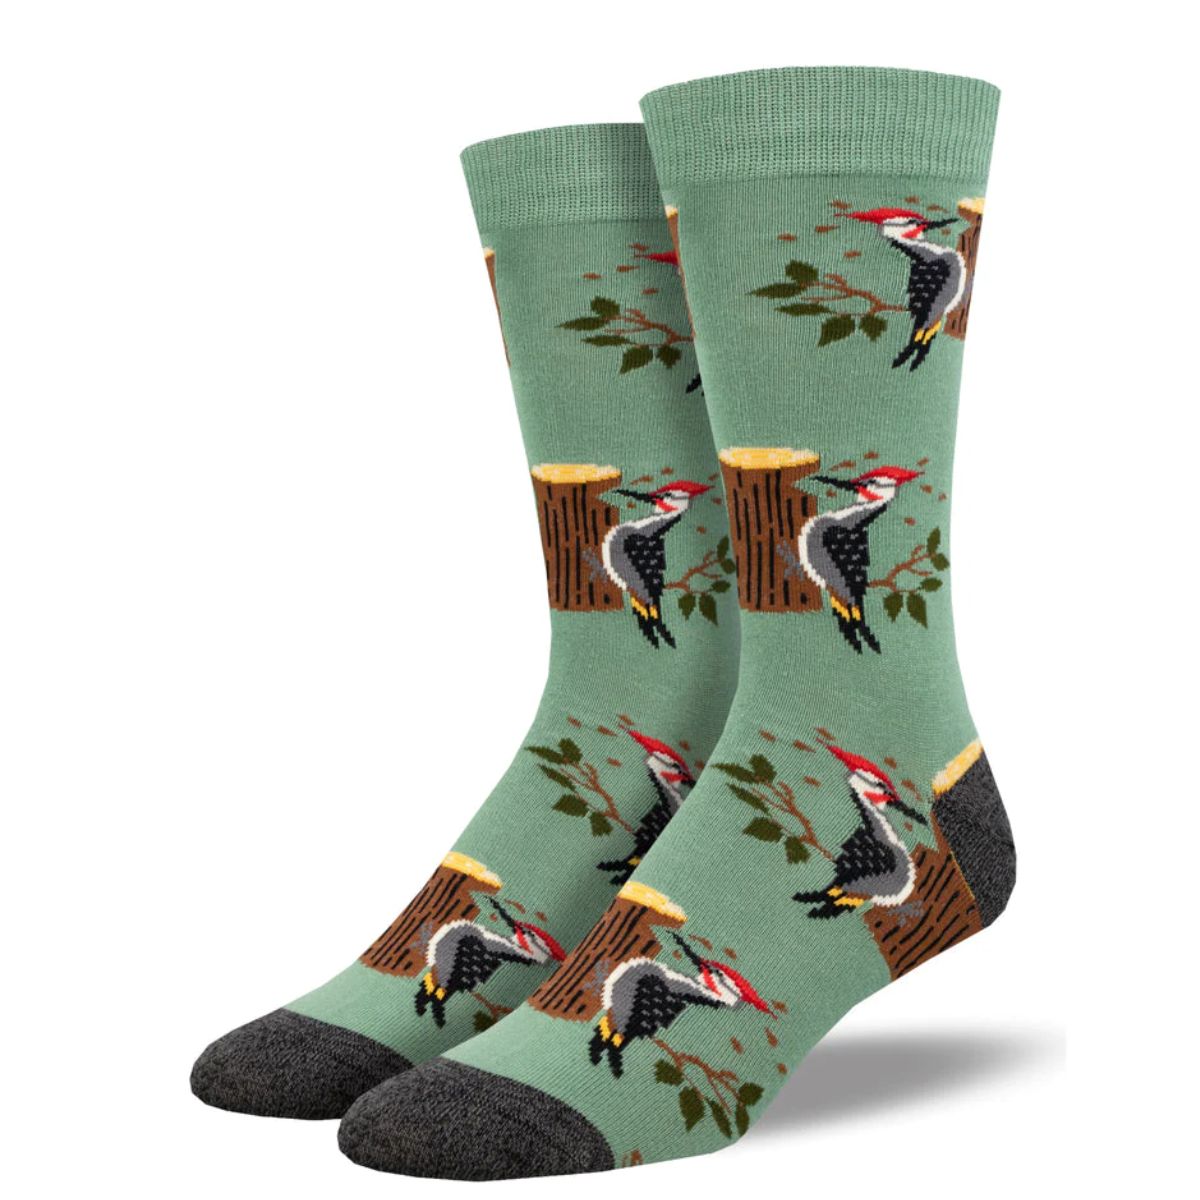 Woodpecker socks a pair of green socks with woodpecker print. 